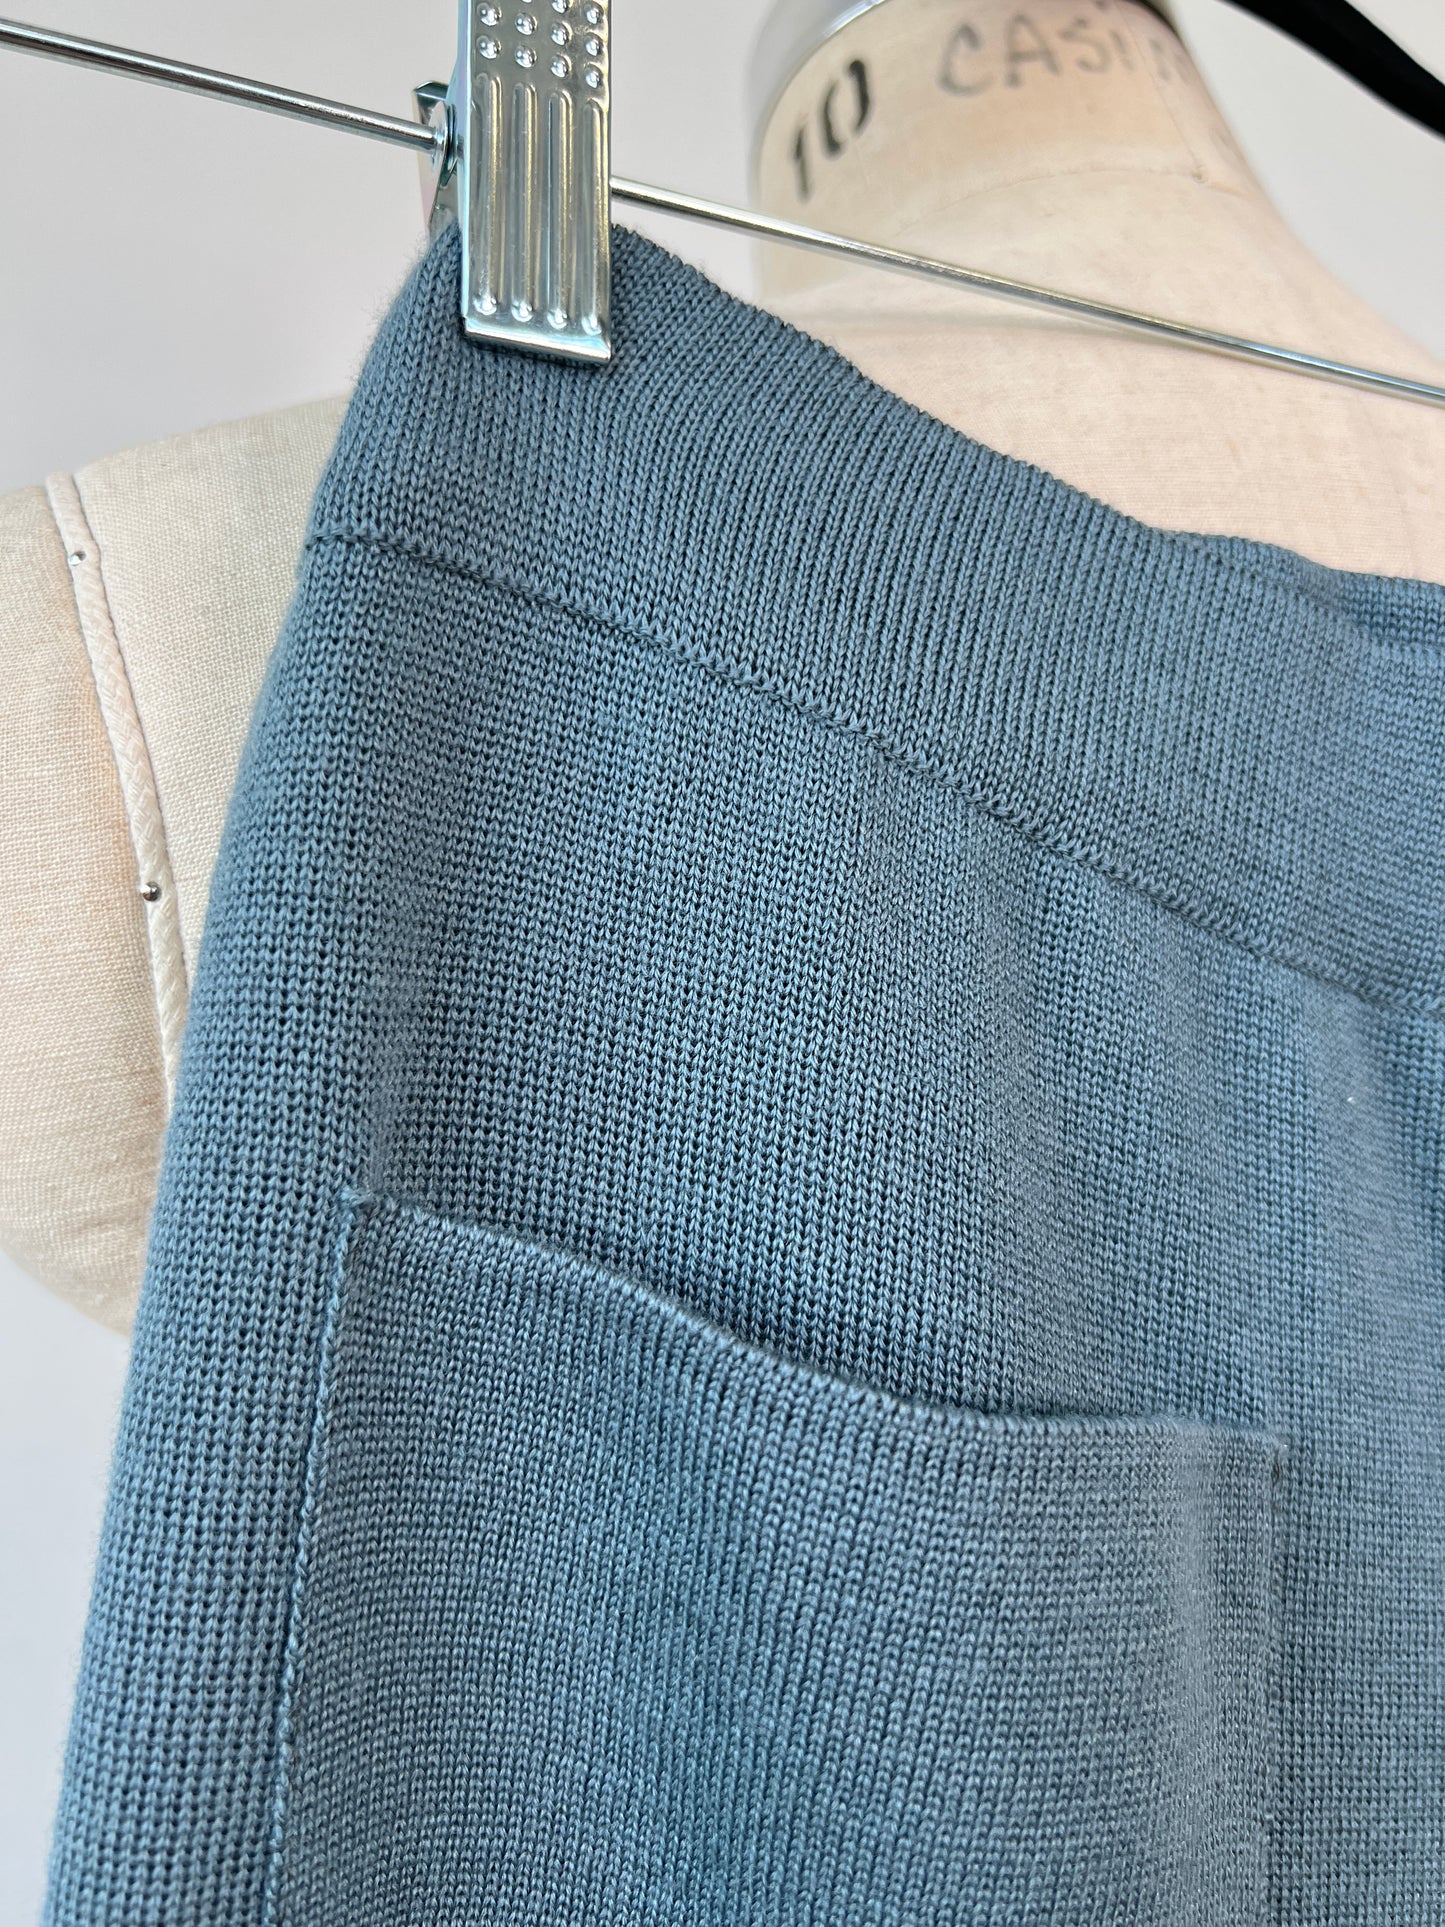 Pantalon à jambe droite pin bleu en pure laine mérinos (S)